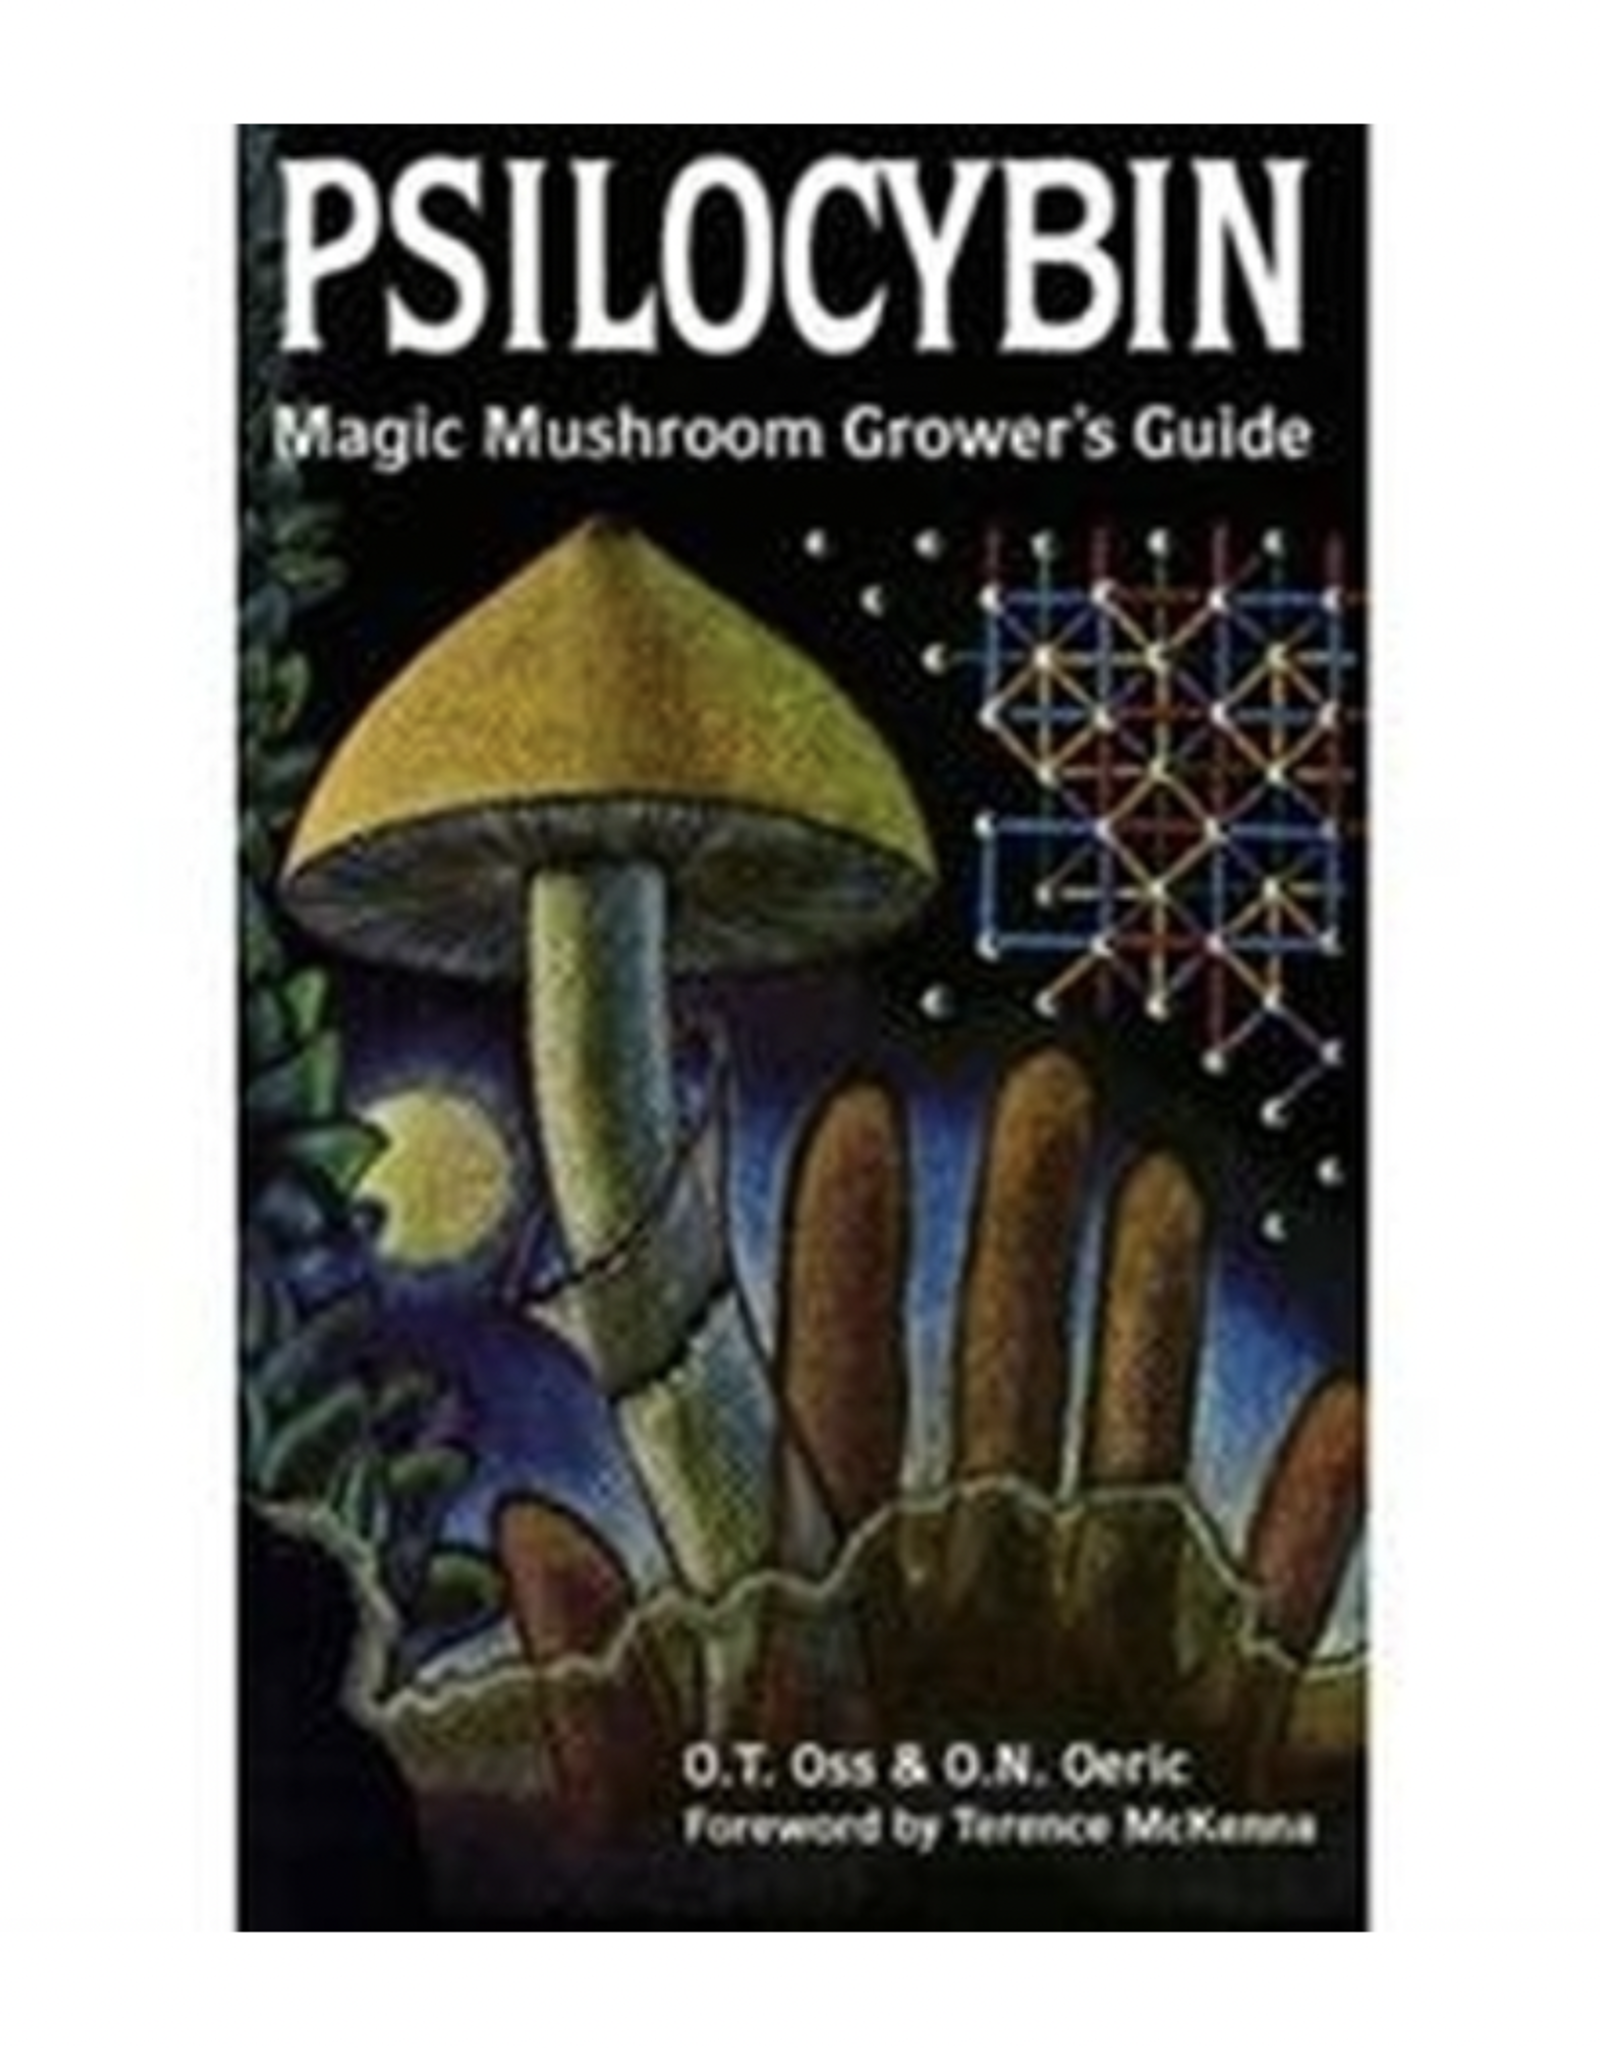 Psilocybin Magic Mushroom Grower's Guide by Ot. Oss and  O.N. Oeric